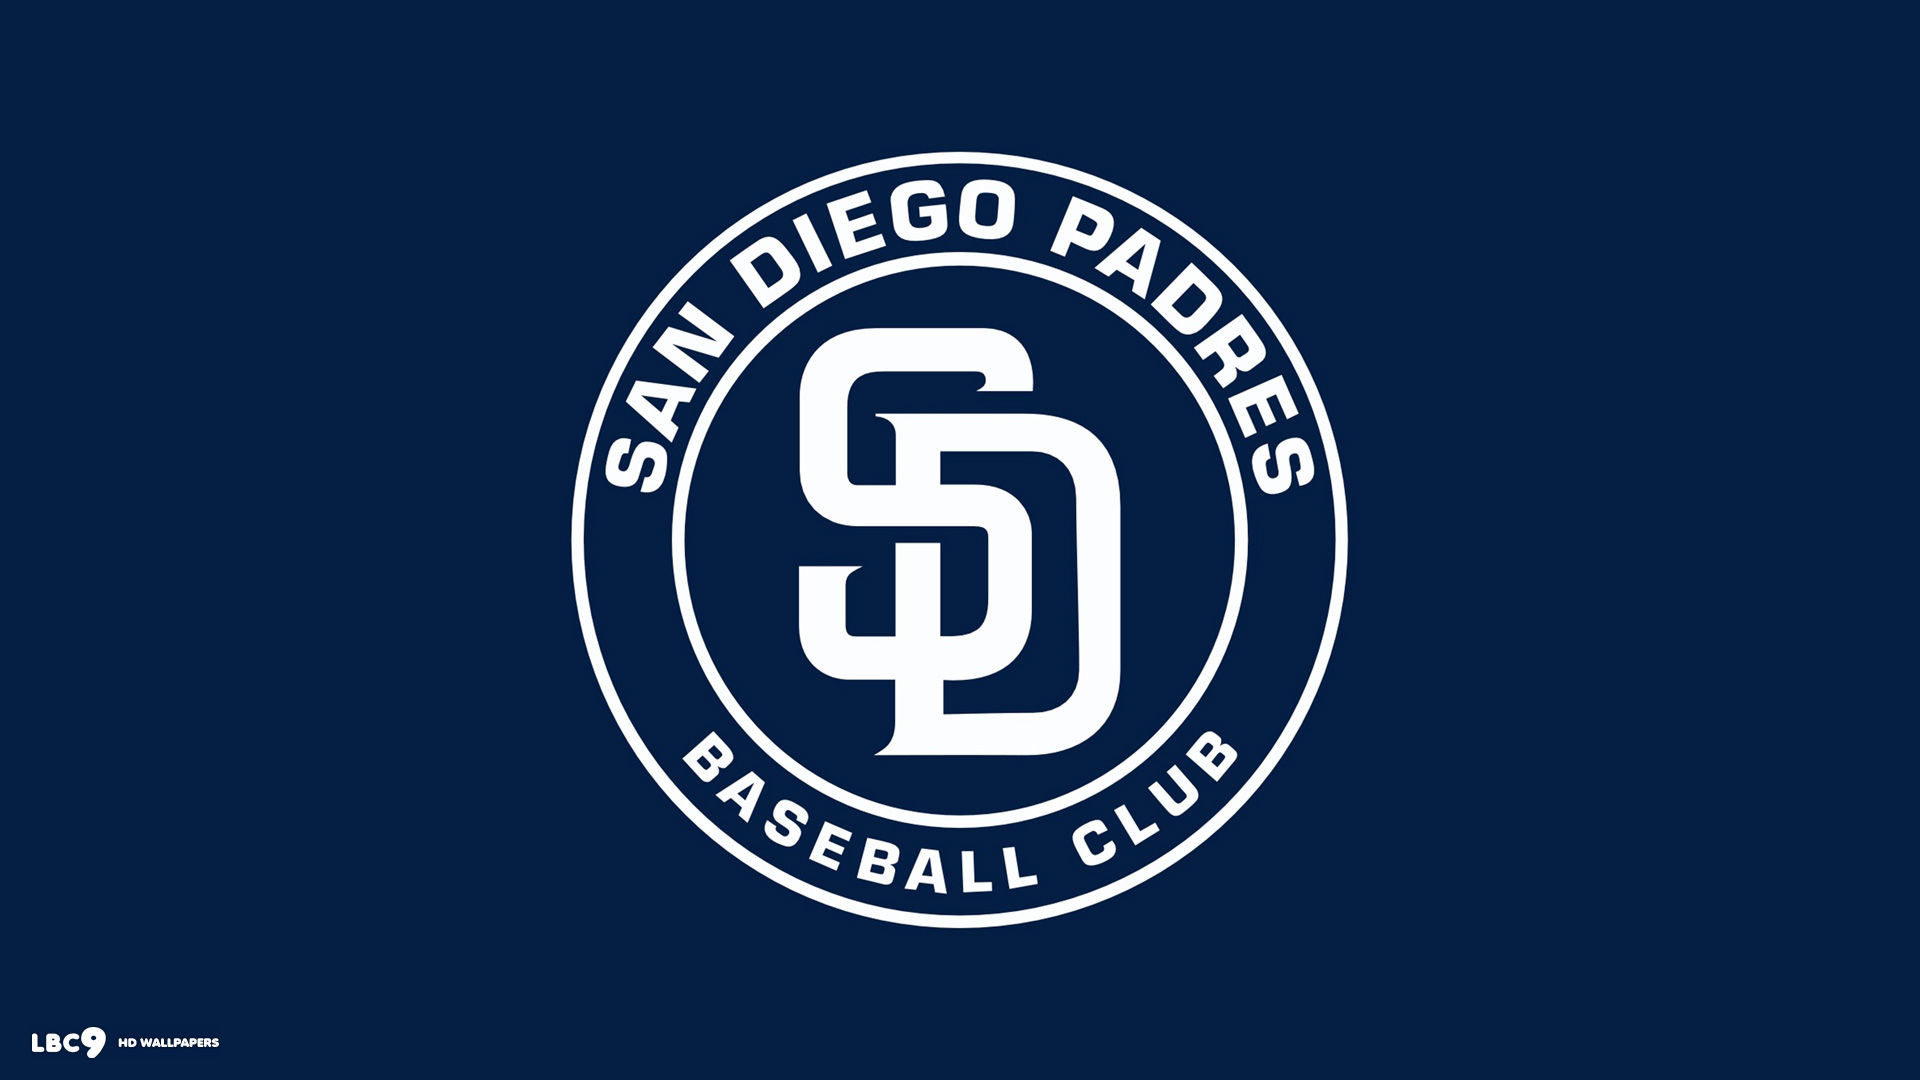 San Diego Padres Mlb Baseball 4 Wallpapers Hd Desktop And Mobile Backgrounds